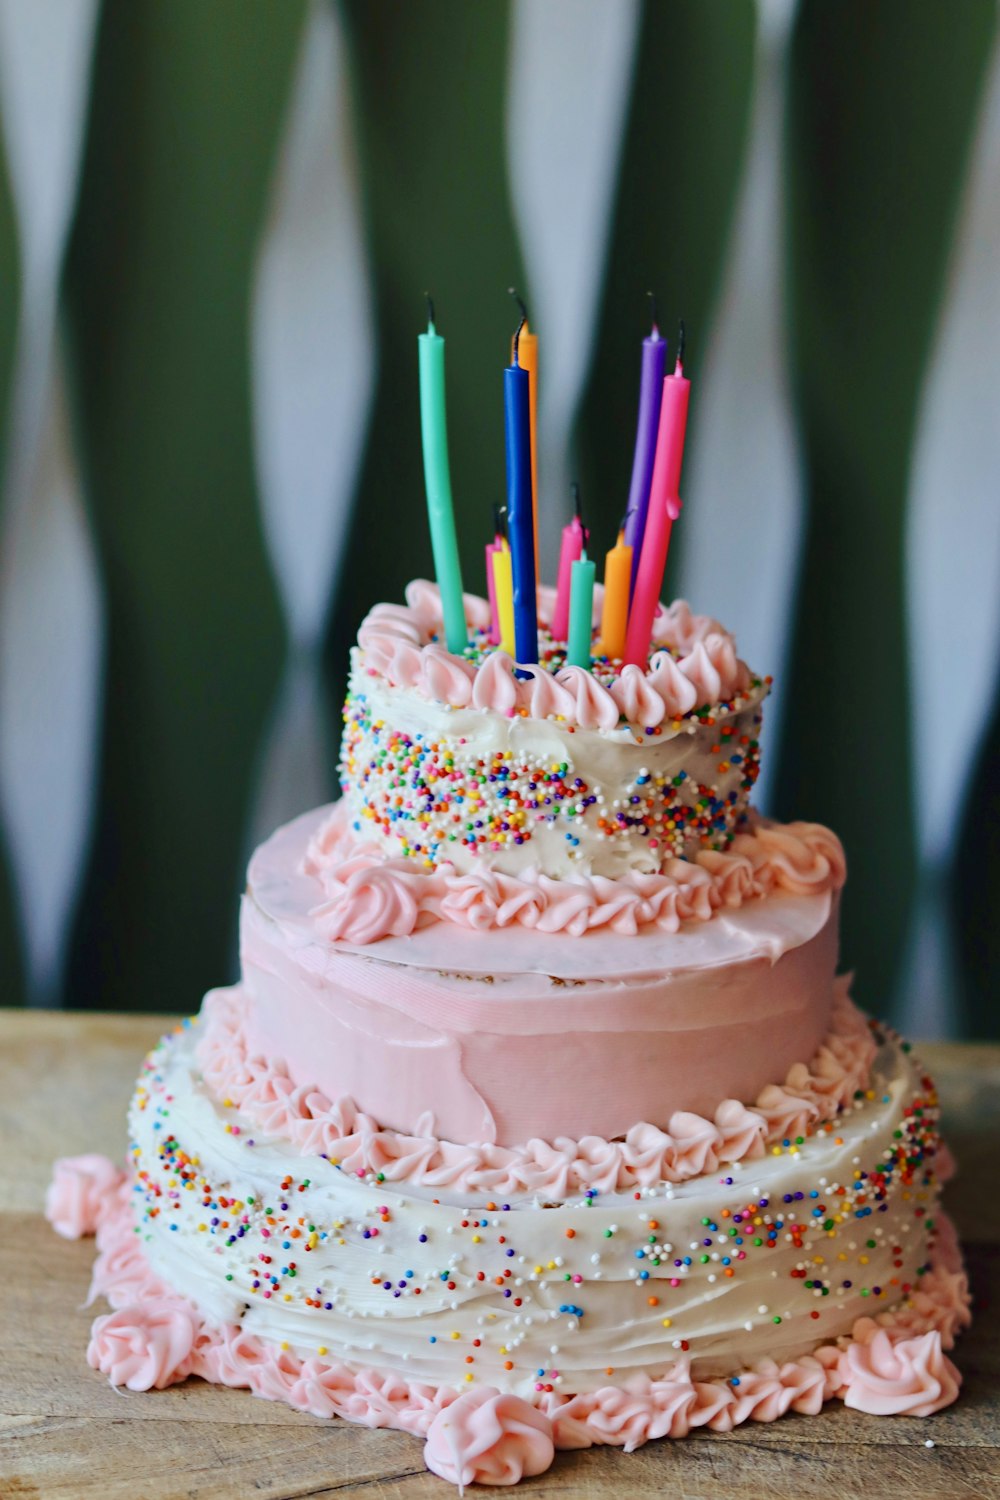 Un pastel de tres niveles con velas que sobresalen de él